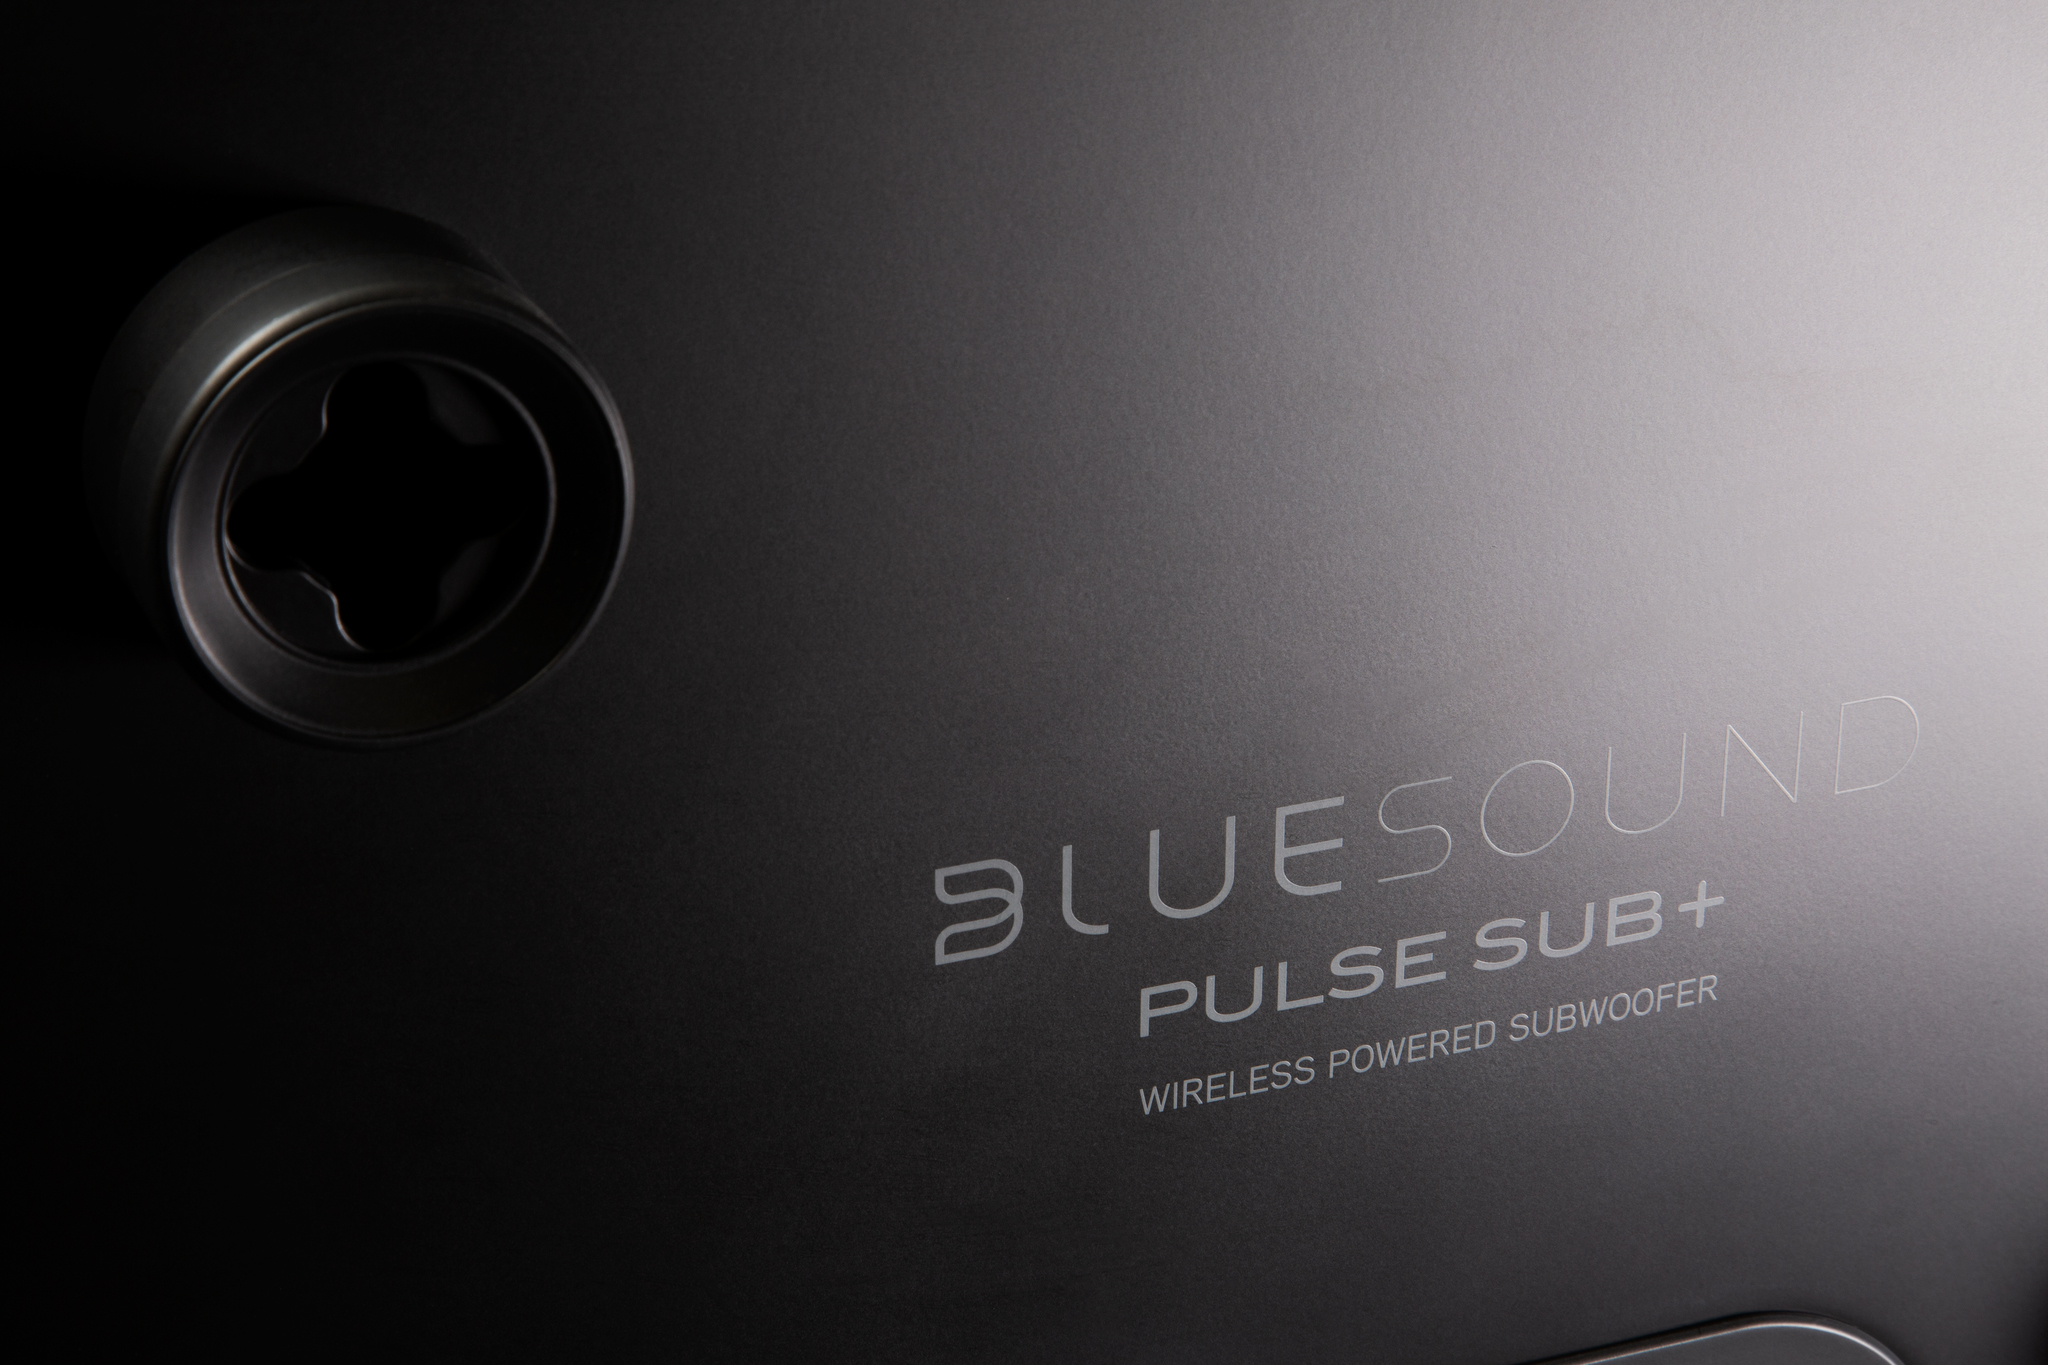 bluesound PULSE SUB